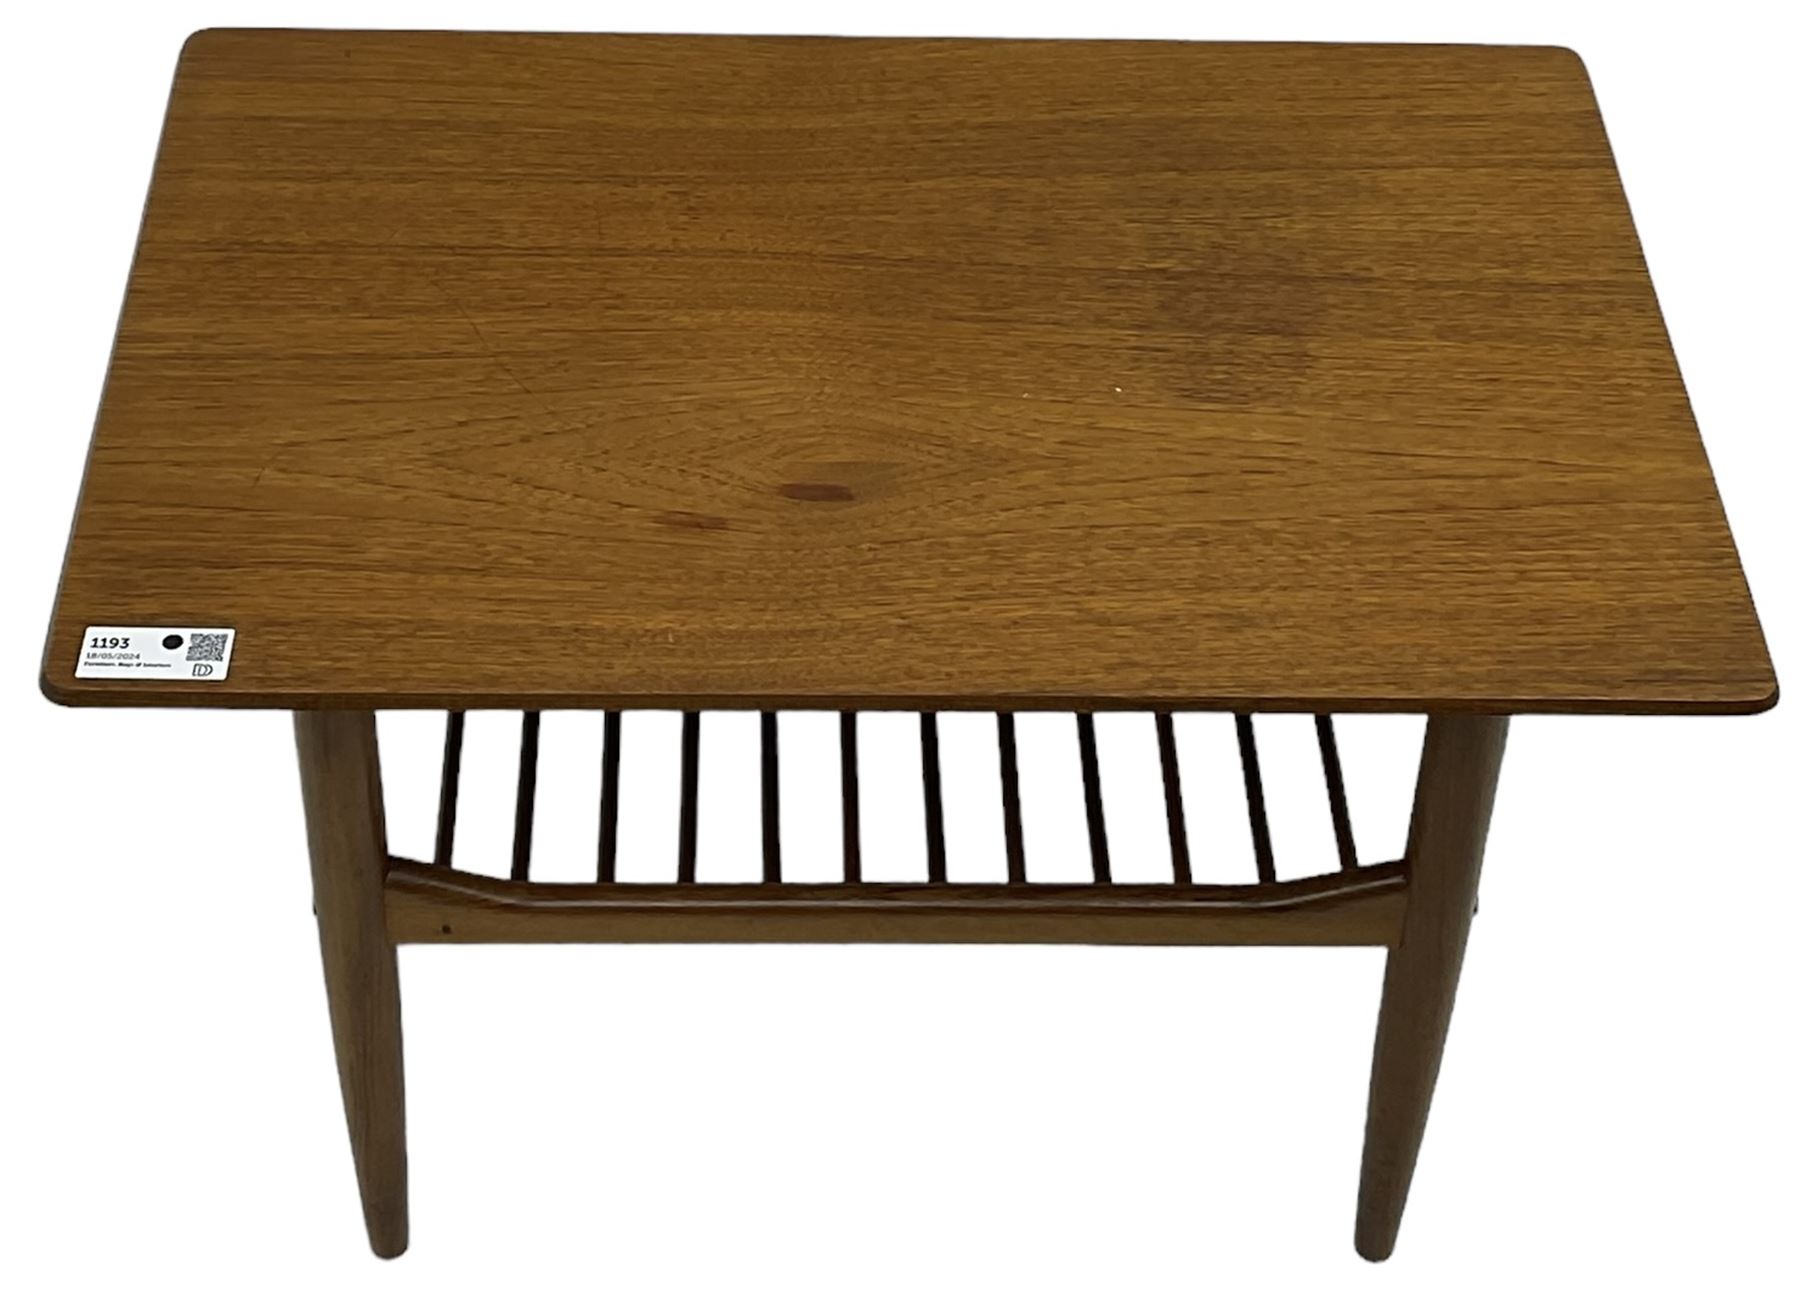 G-Plan - mid-20th century teak coffee table - Image 3 of 4